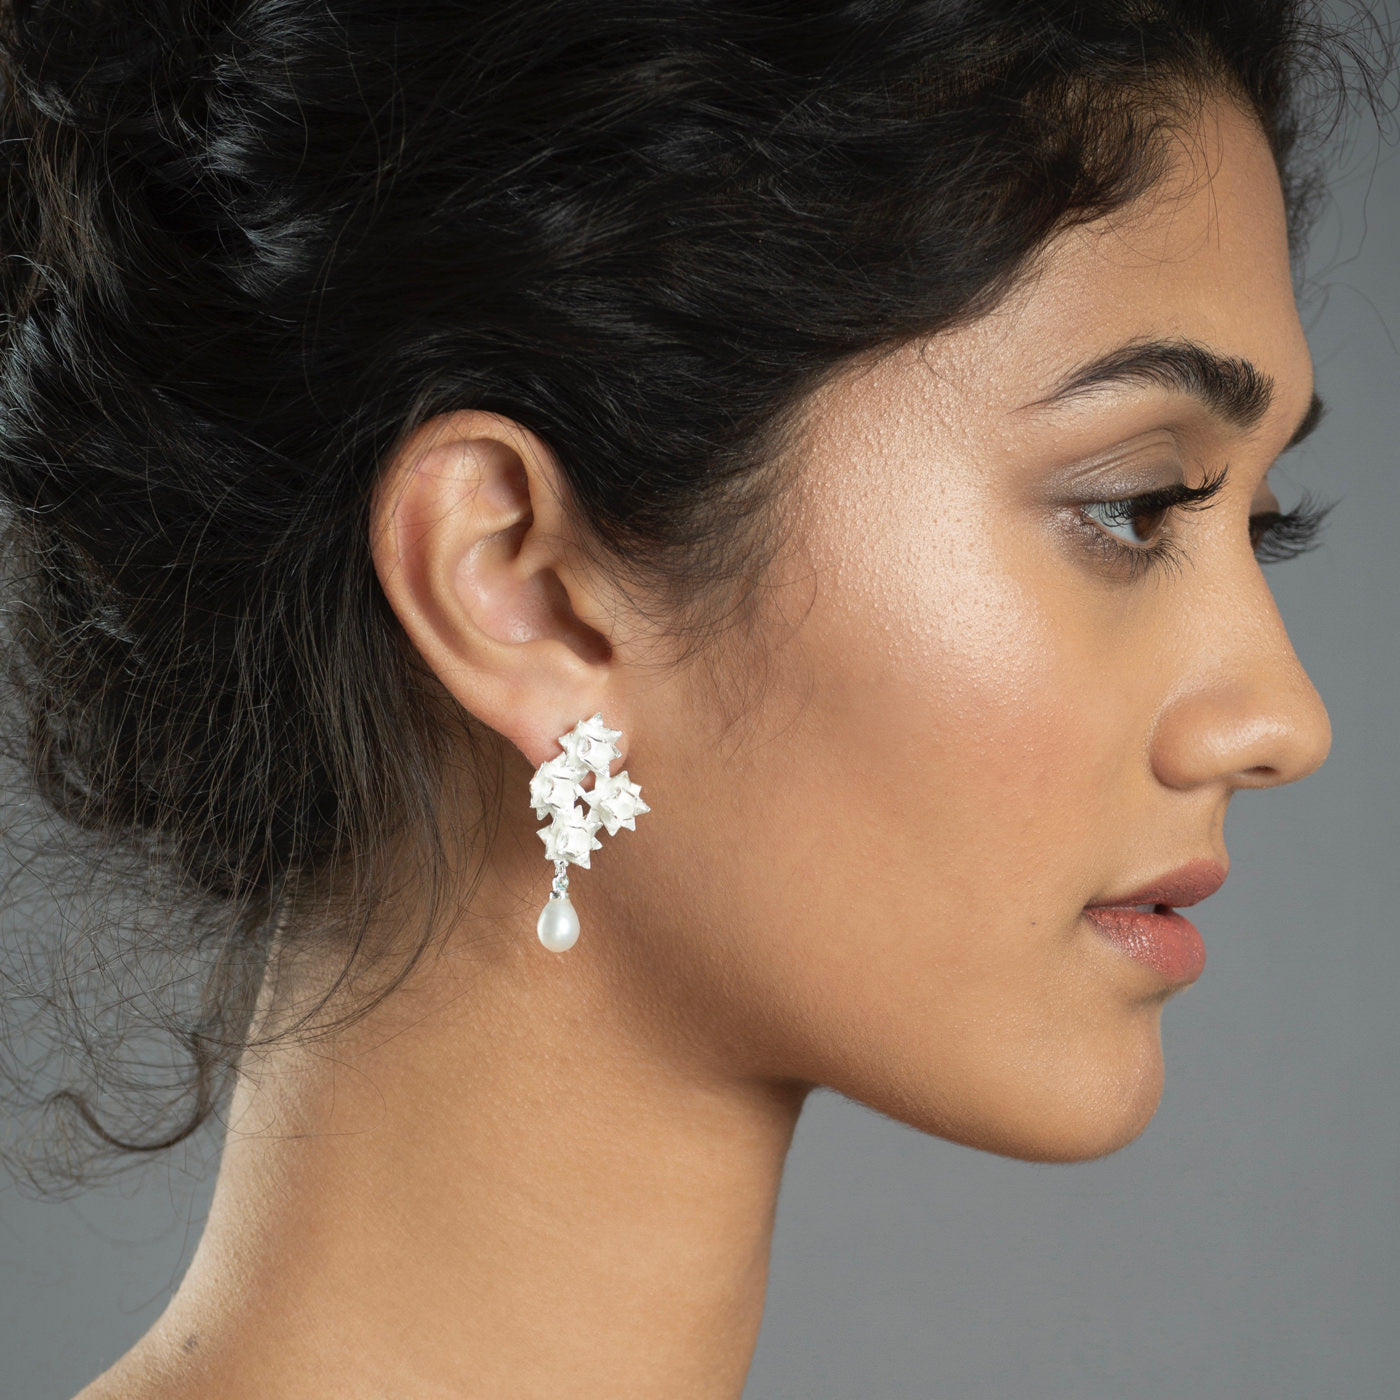 Four Lotus Pearl Earrings - Silver